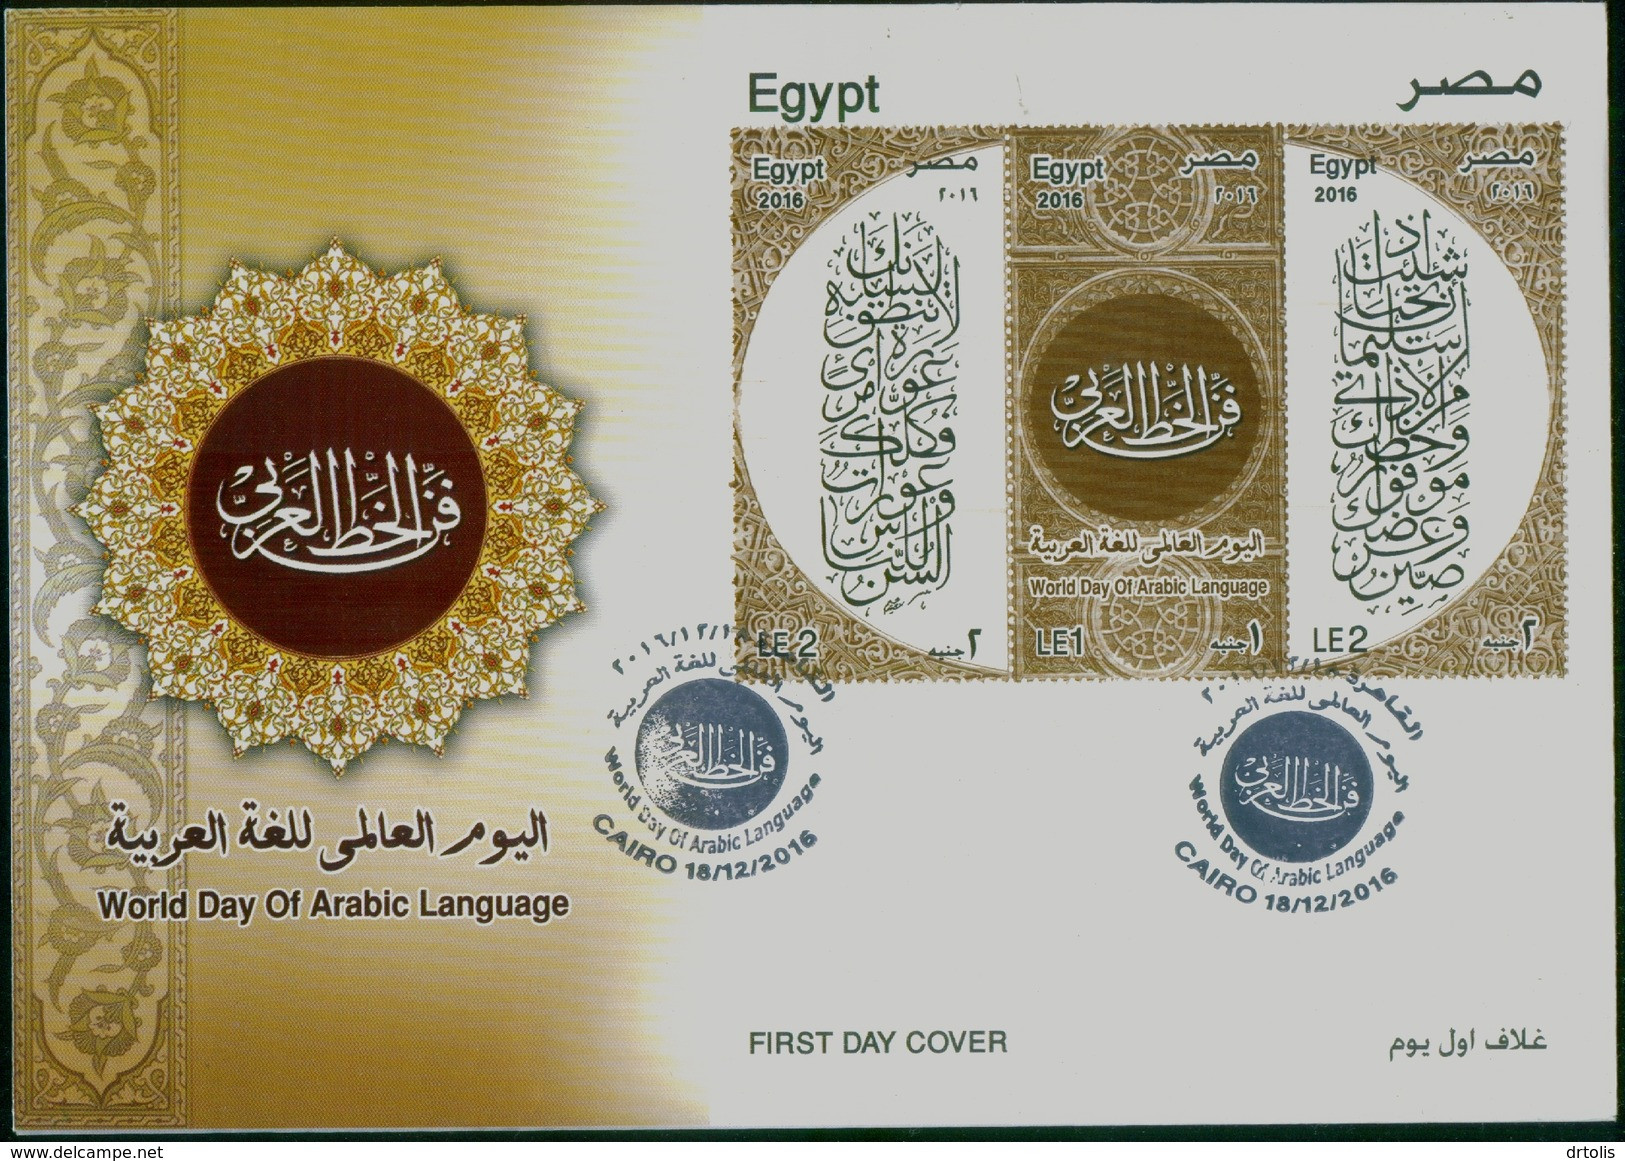 EGYPT / 2016 / WORLD DAY OF ARABIC LANGUAGE / THE ART OF ARABIC CALLIGRAPHY / FDC - Storia Postale